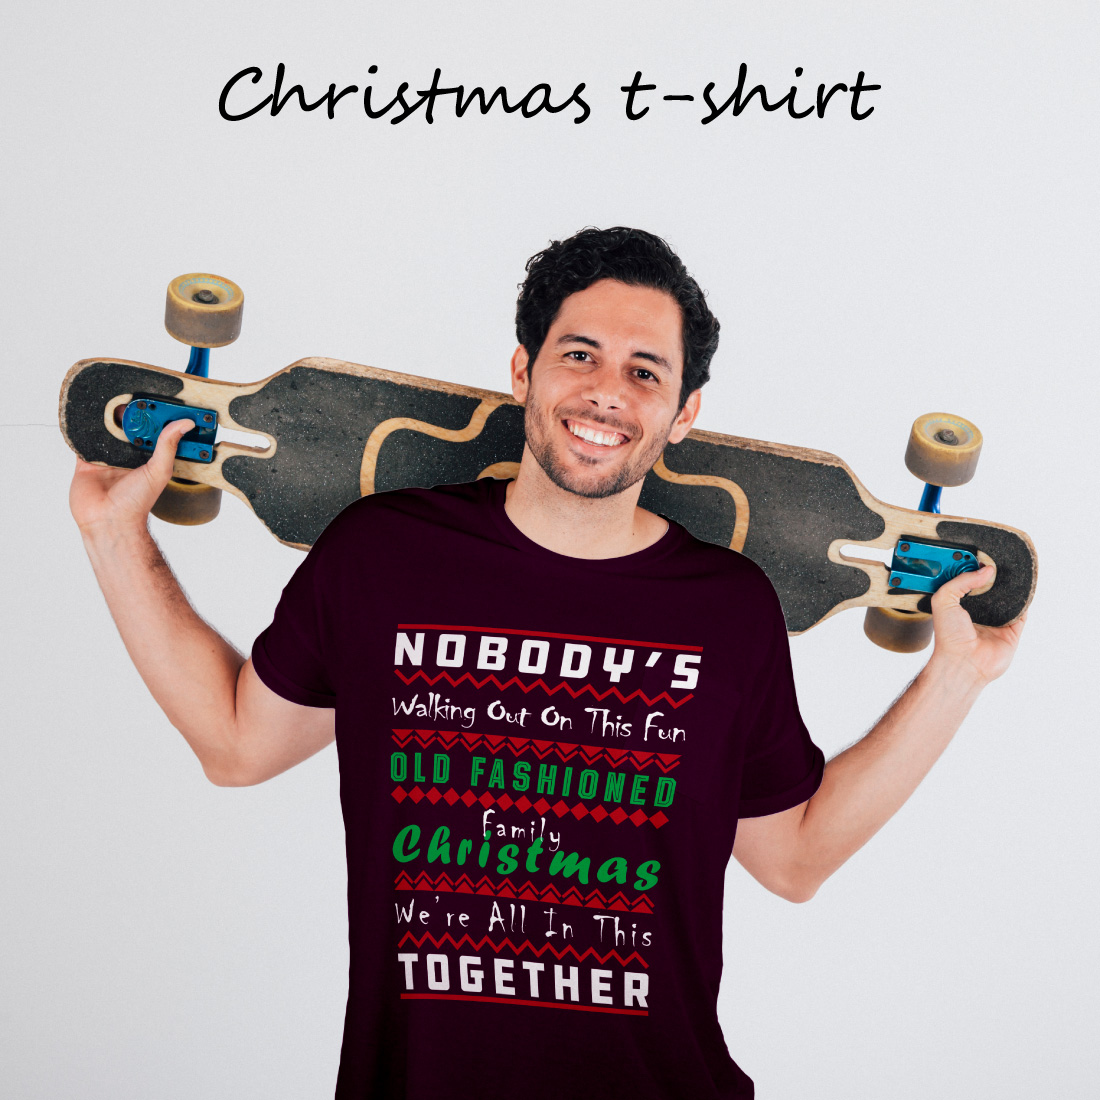 Christmas t-shirt design cover image.